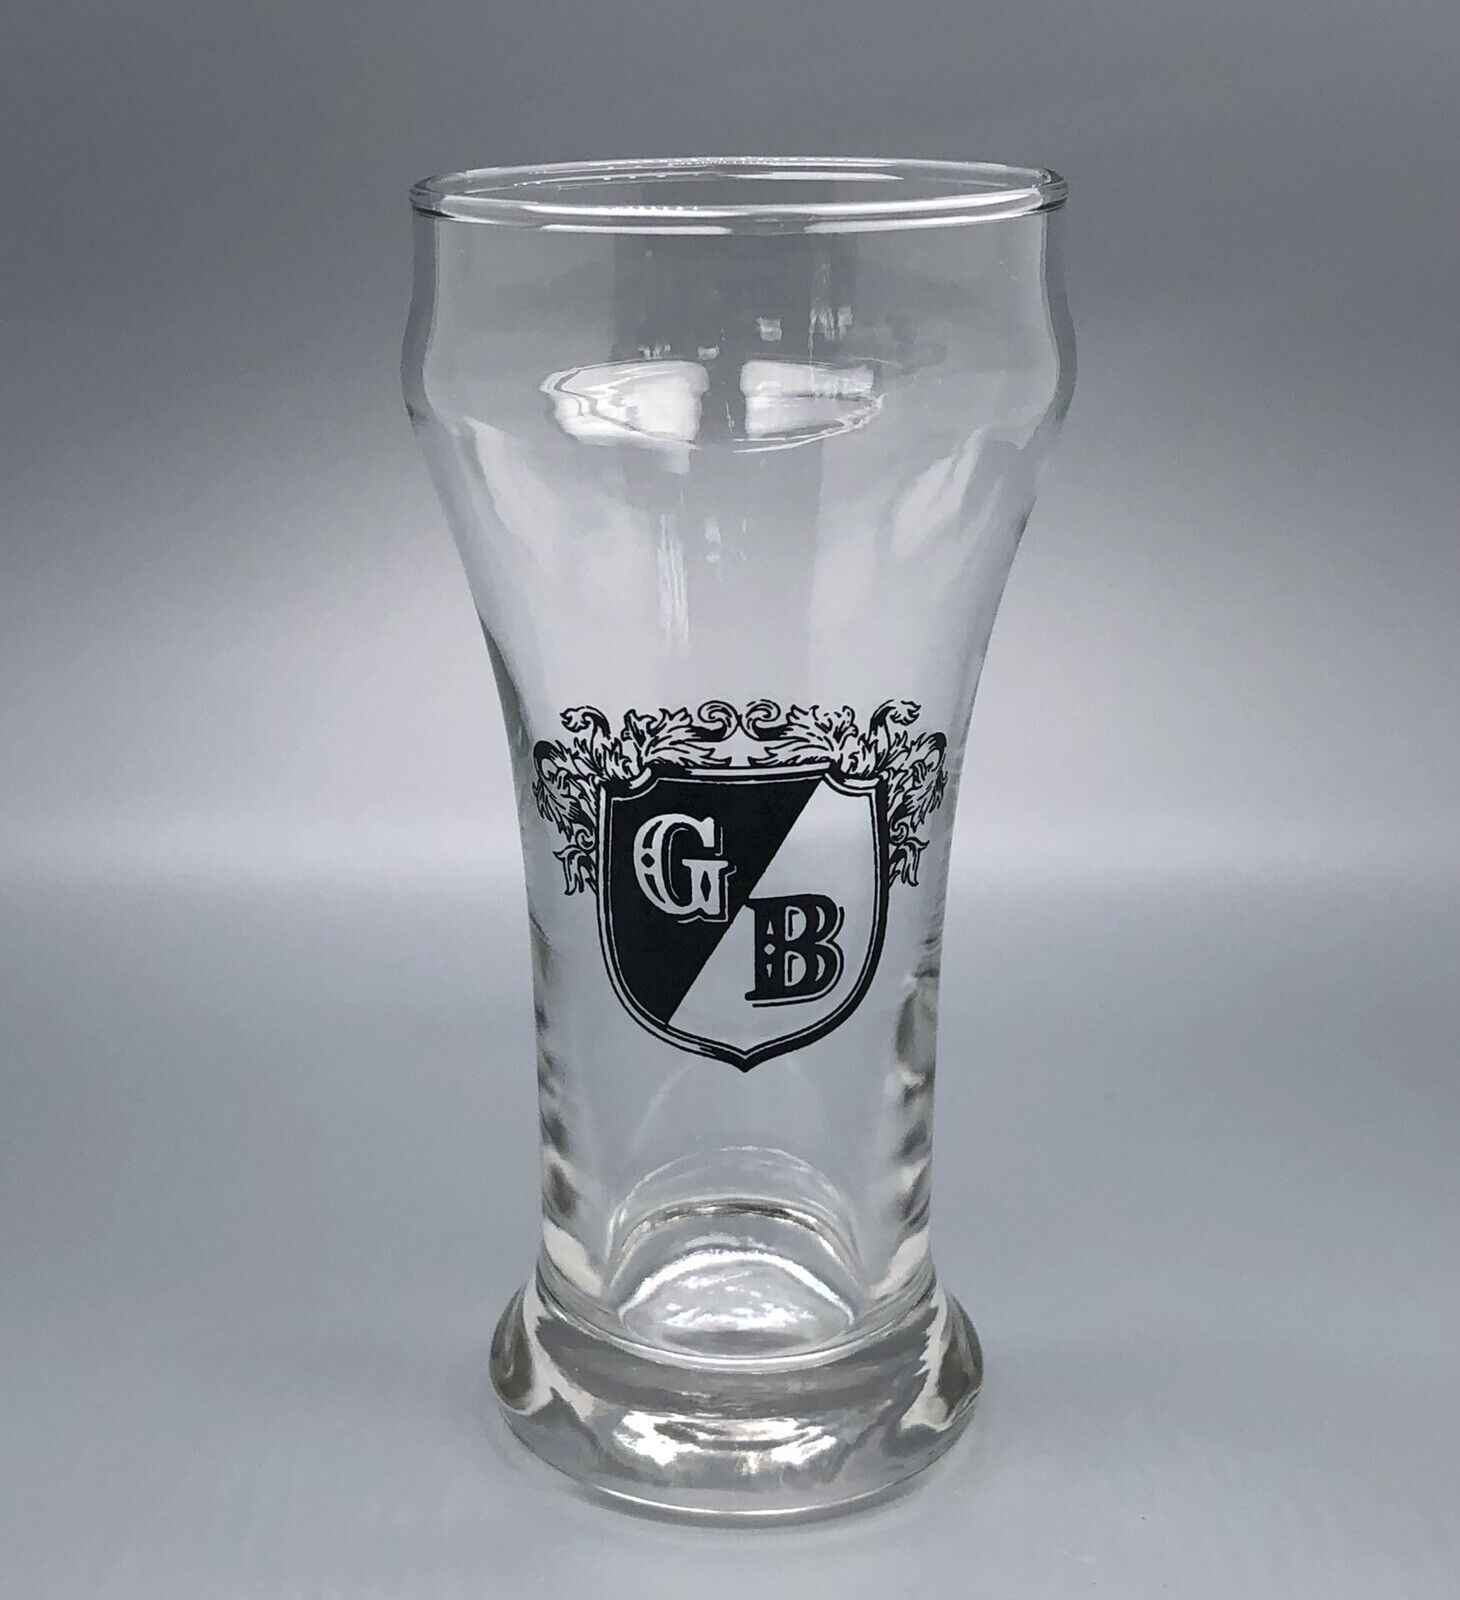 Griesedieck Bros Beer Sham Glass / Vtg Tavern Advertising / Man Cave Bar Decor